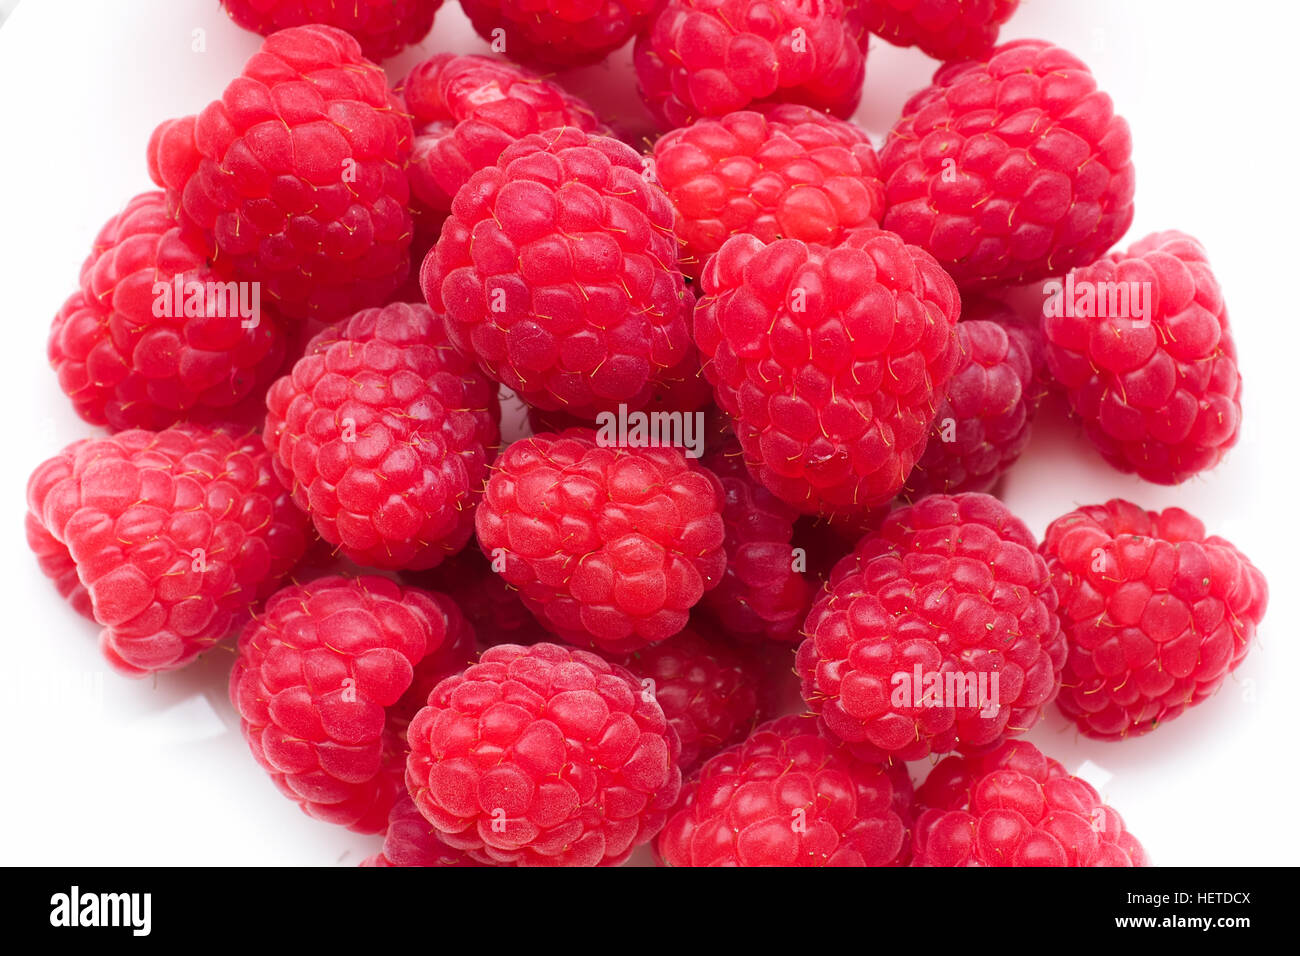 Bowl of Fresh Raspberries Stock Photo